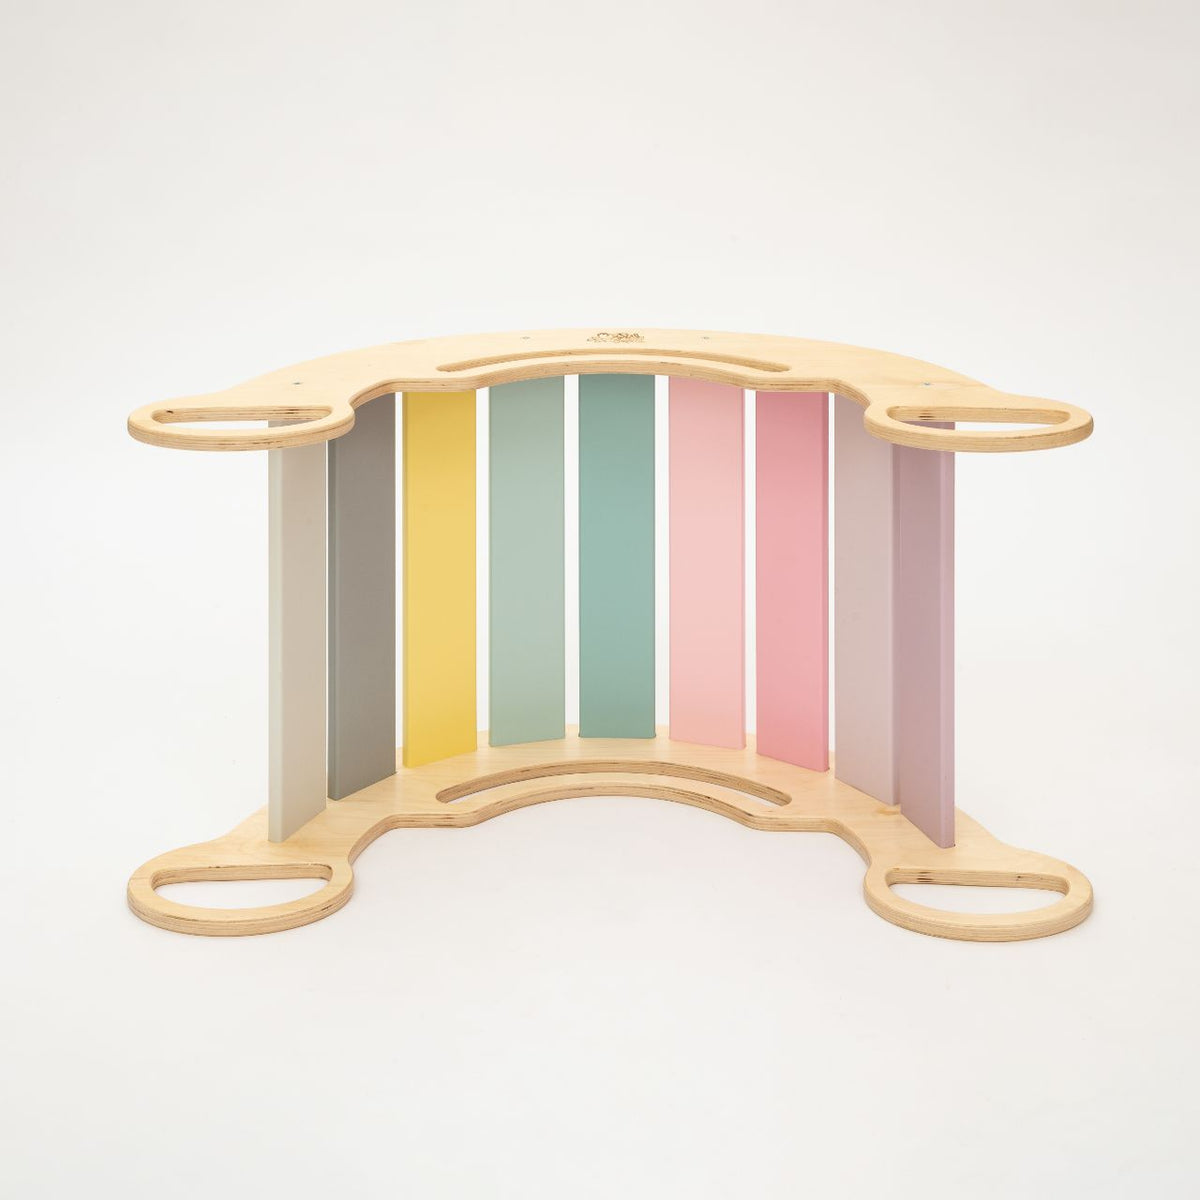 Set - balancín / tablero doble cara / silla - colores pastel